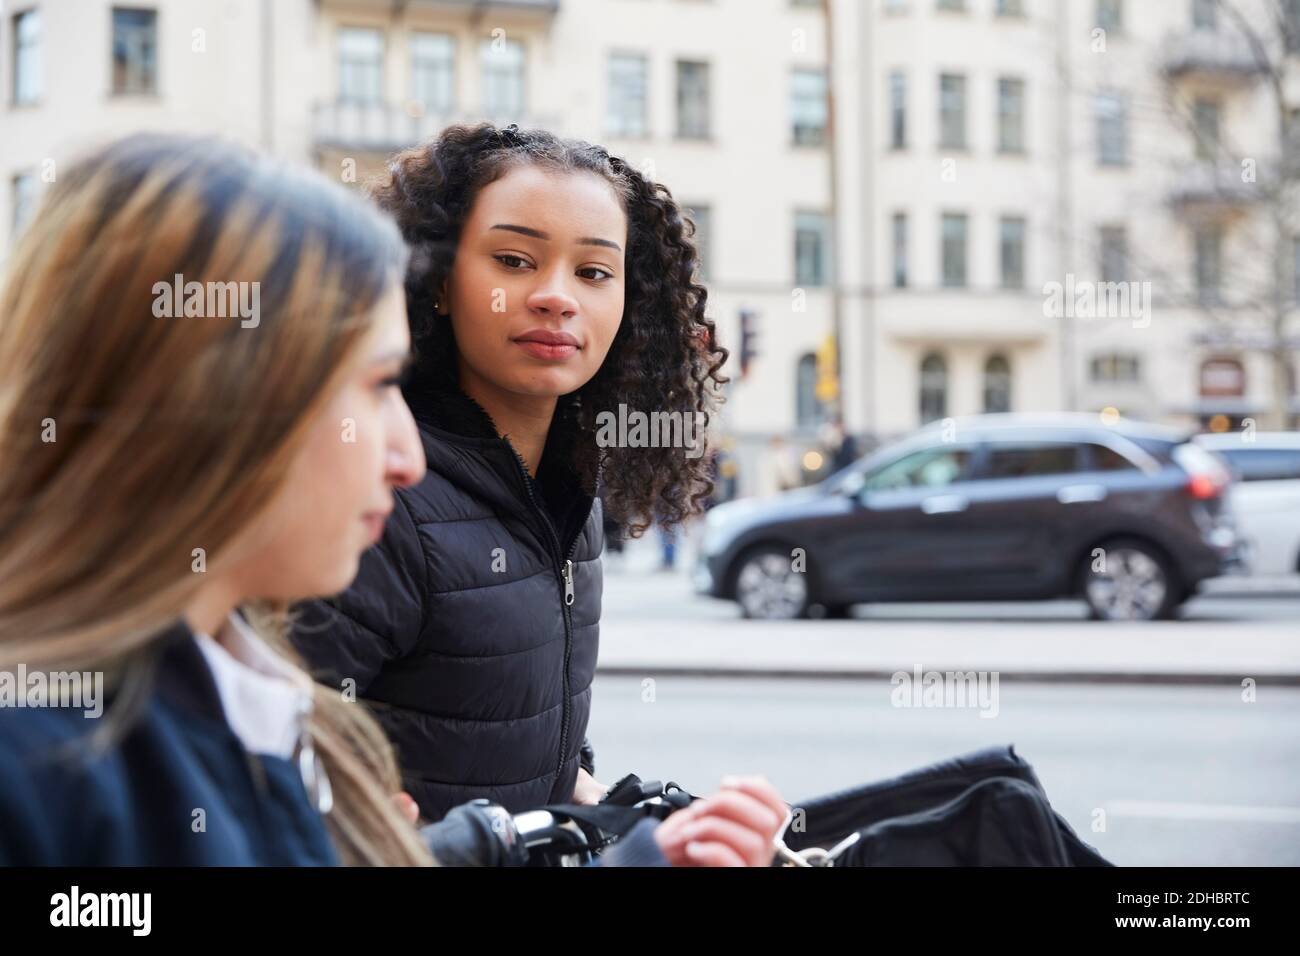 Une adolescente regarde une amie dans la rue de la ville Banque D'Images